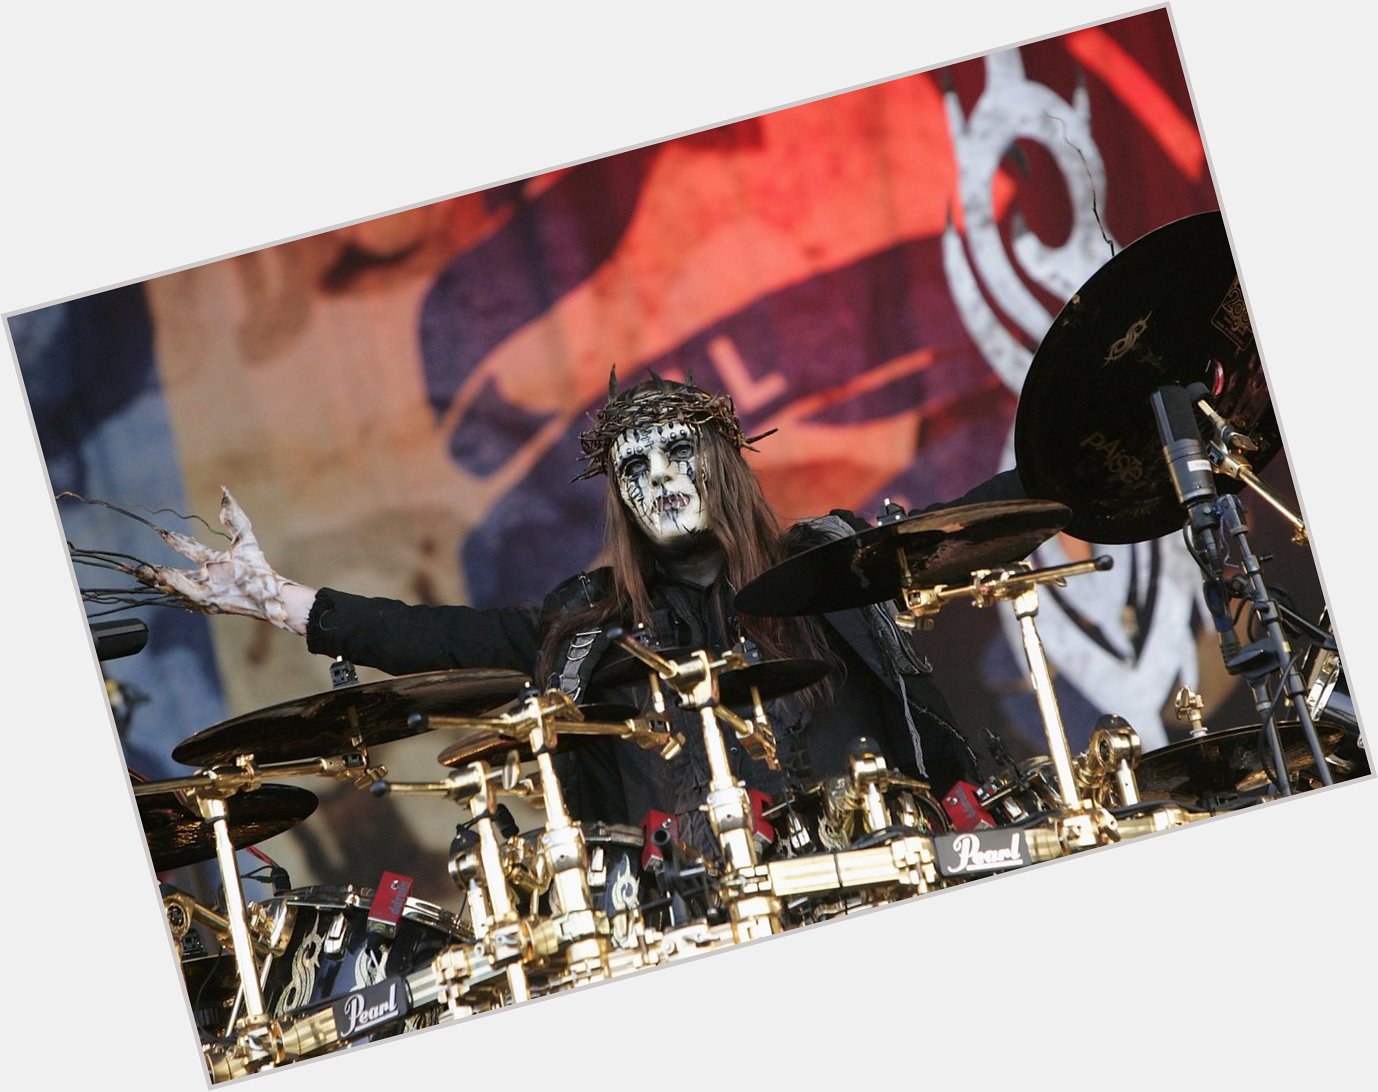 Happy birthday to founding Slipknot drummer Joey Jordison! 